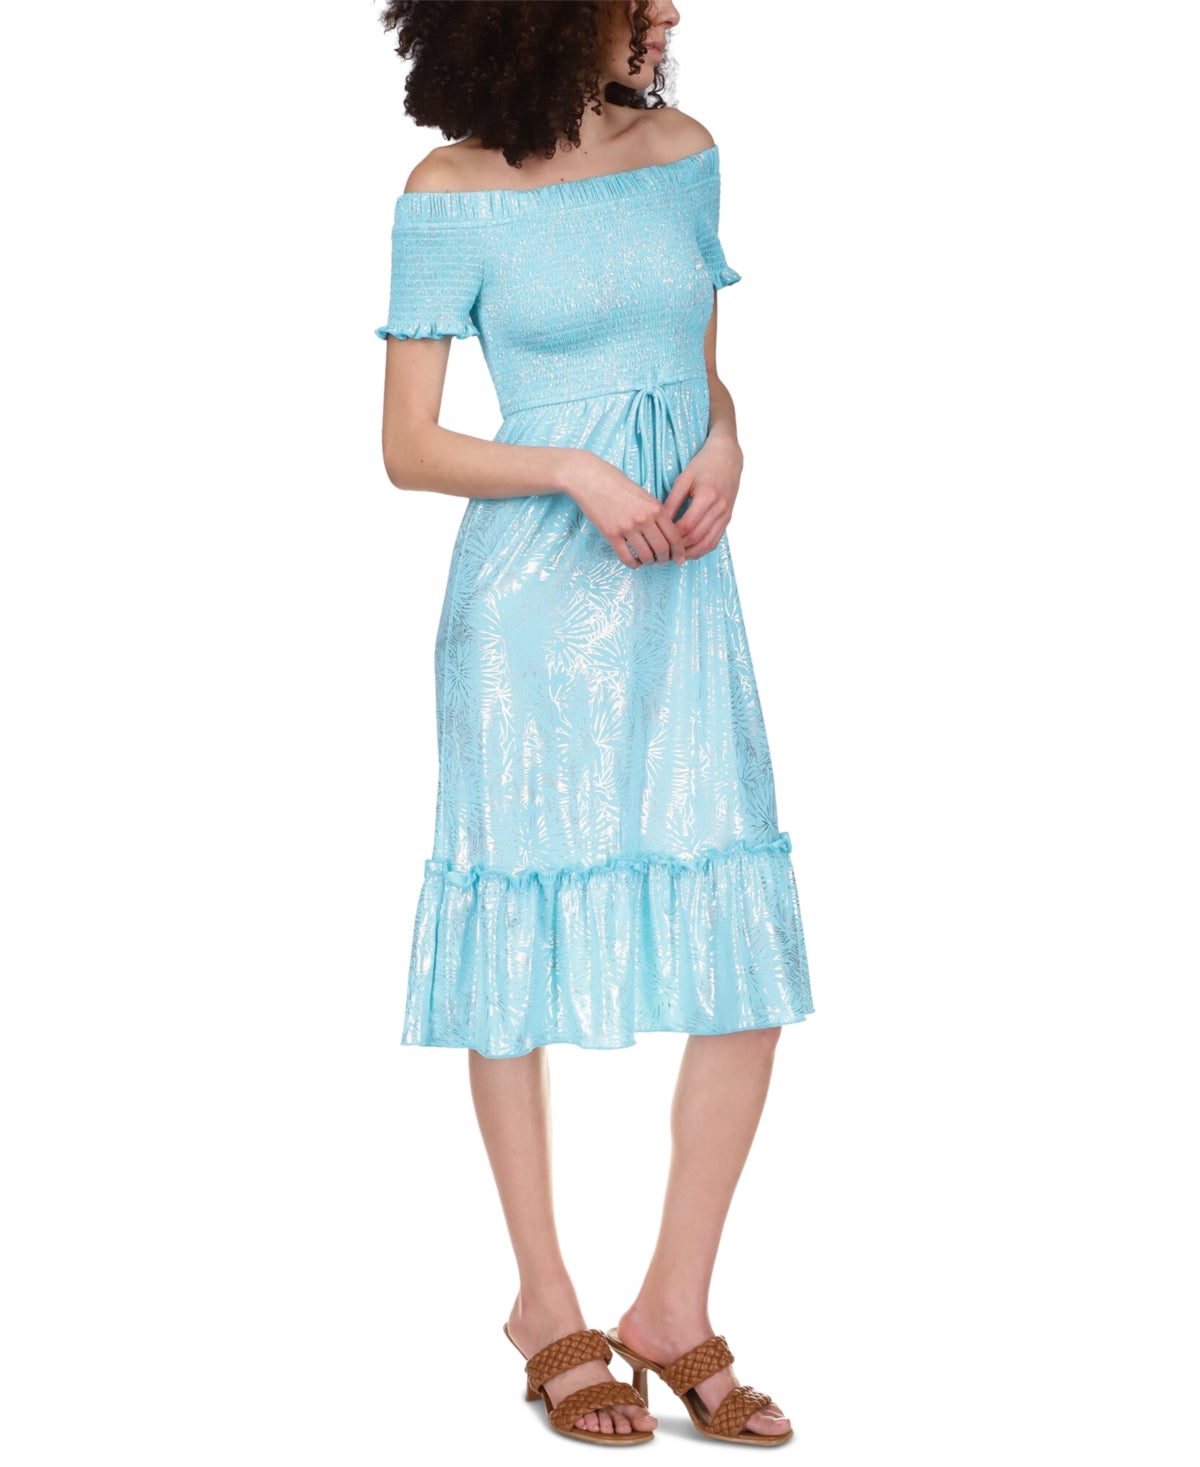 Michael Kors Women's Foil Print Smocked Midi Dress Blue - Ruumur